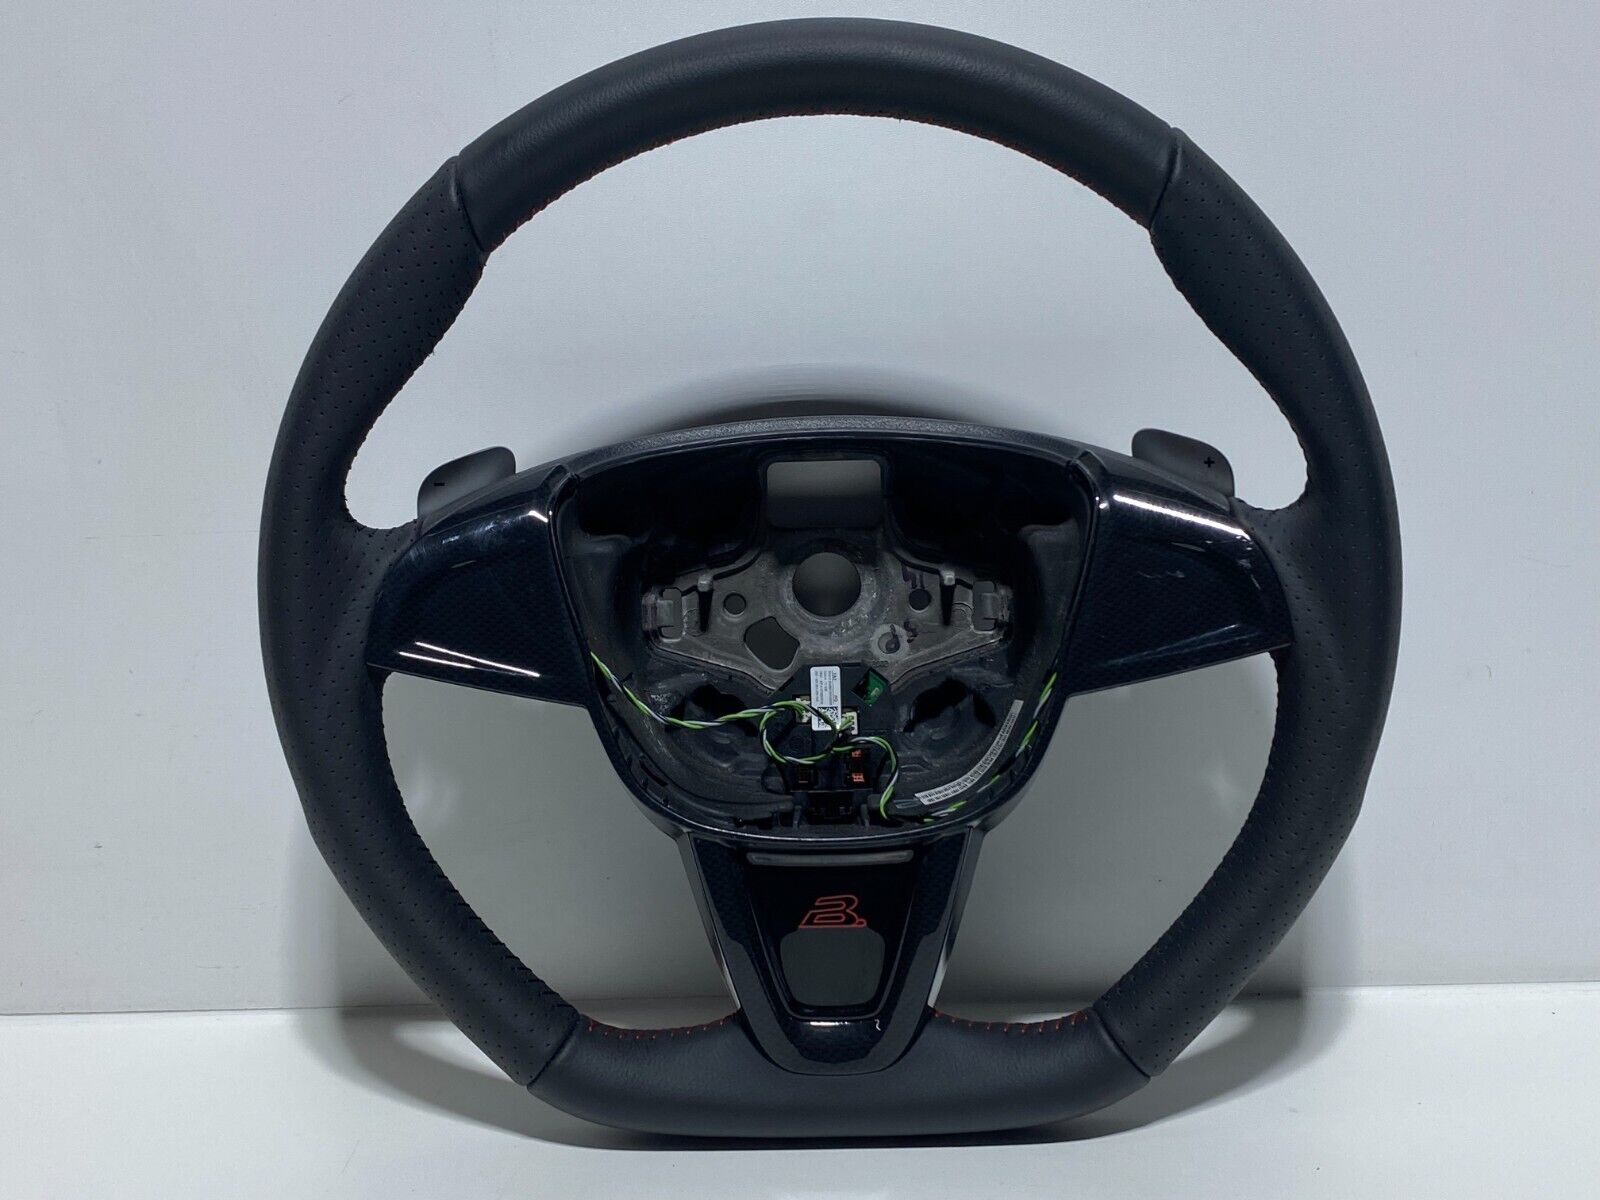 SEAT IBIZA BOCANEGRA CARBON steering wheel sport shift rockers steering wheel